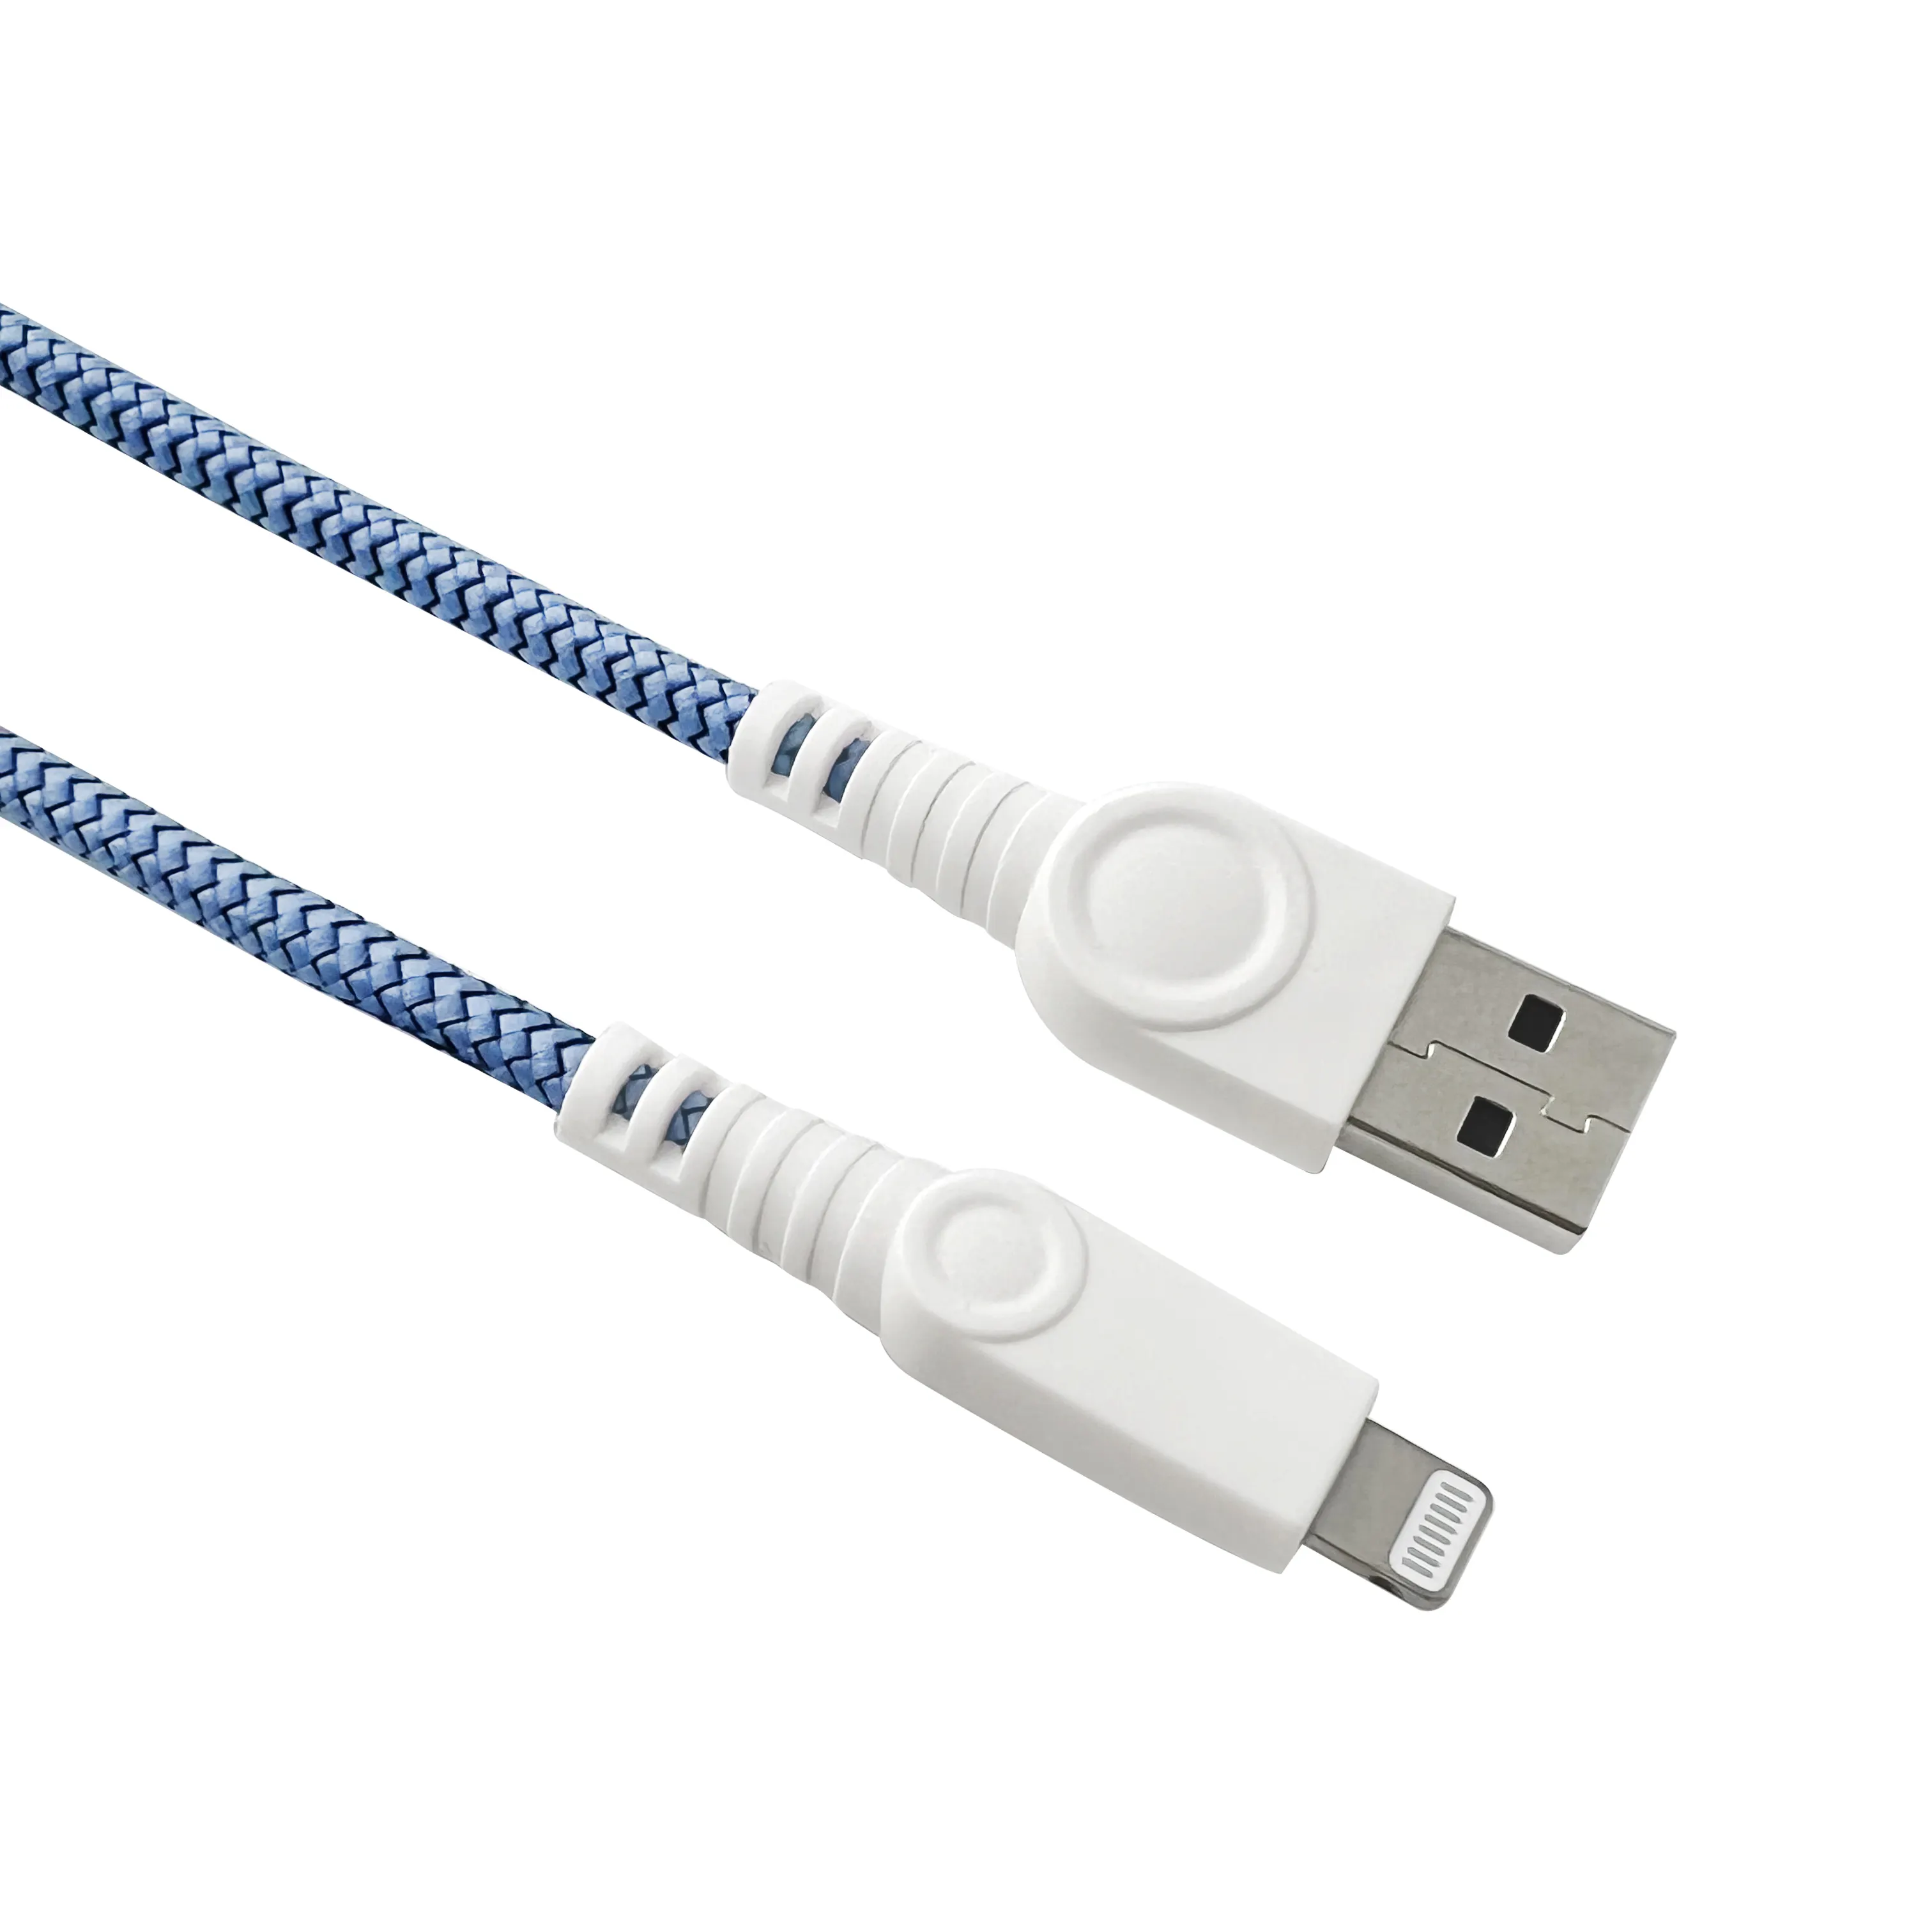 Cabos e acessórios comumente usados Cabo USB para iPhone carregamento cabo pronto para enviar